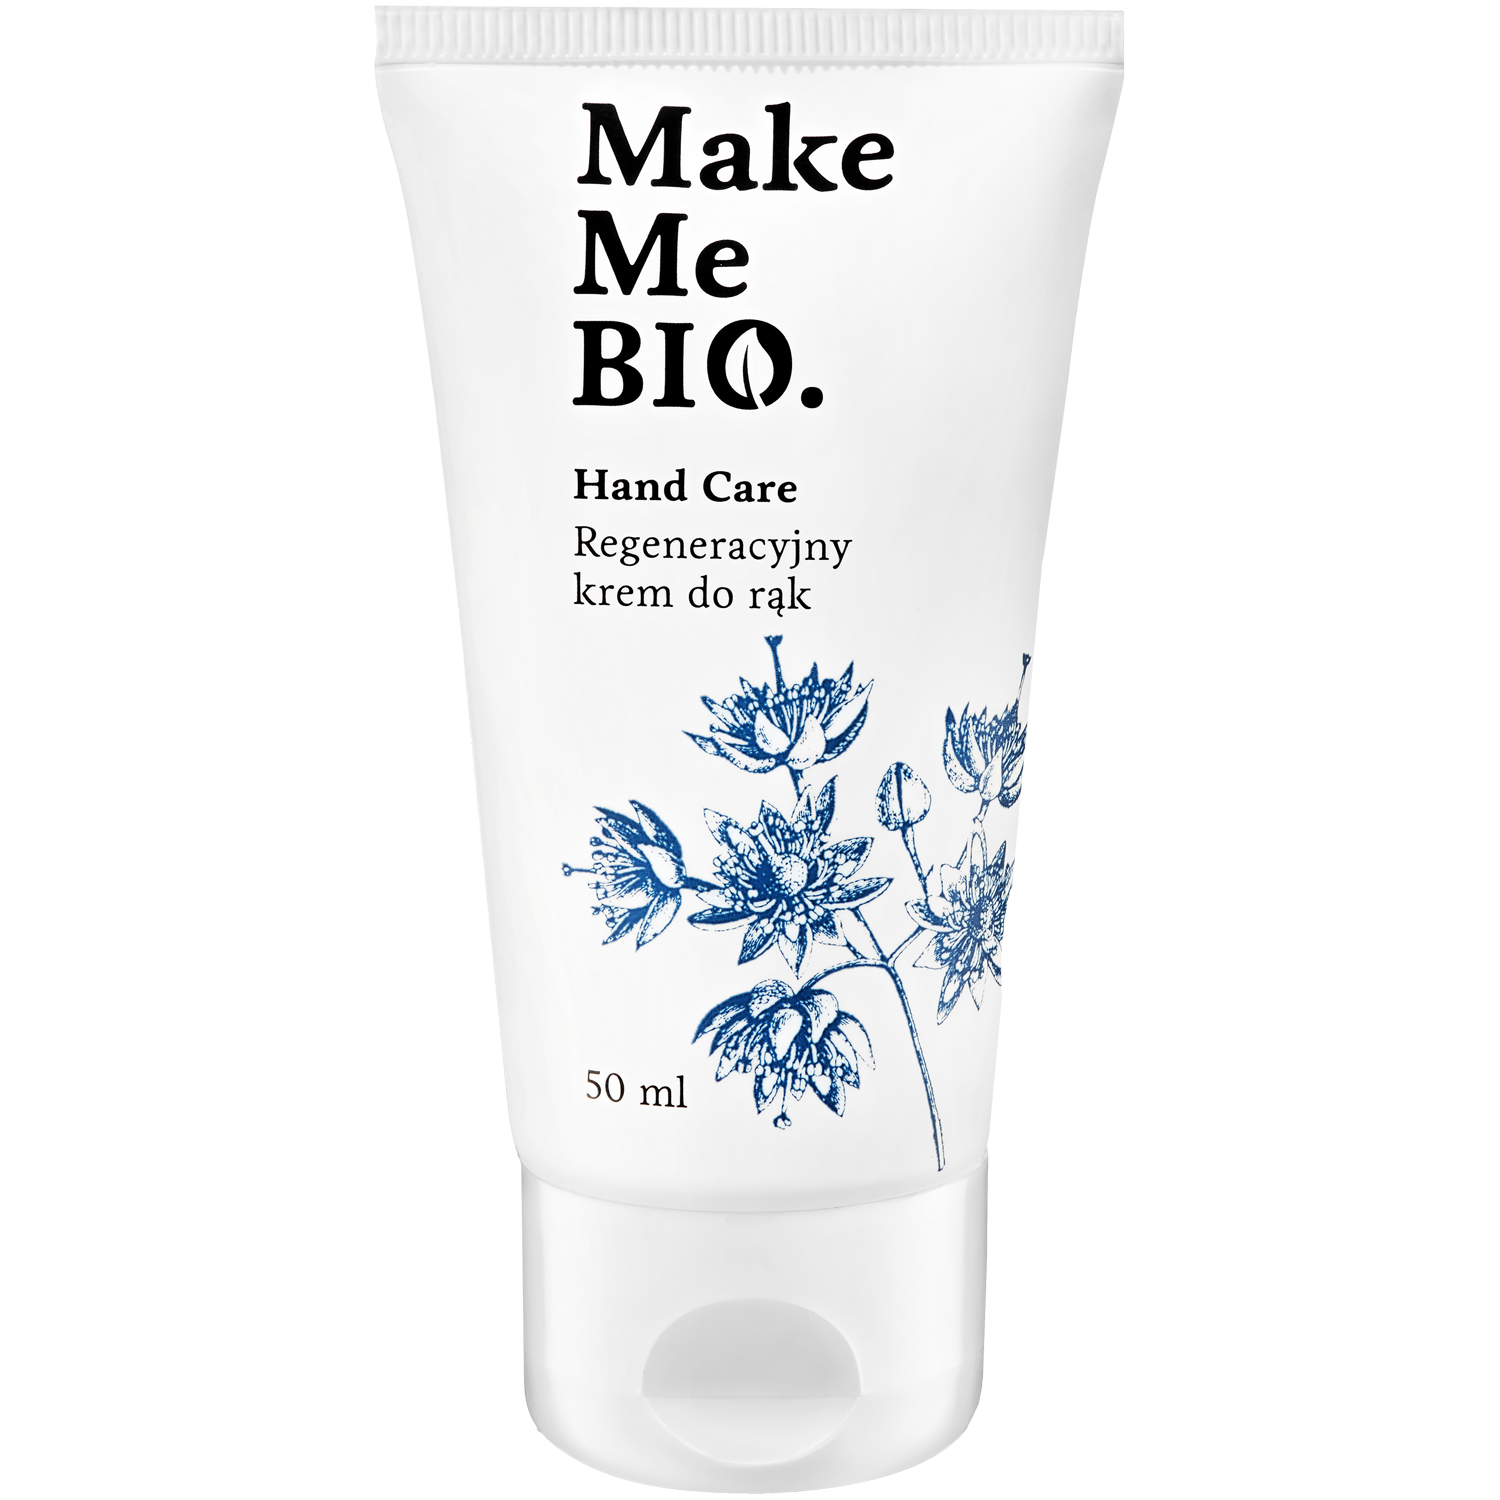 Make Me Bio Hand Care регенерирующий крем для рук, 50 мл